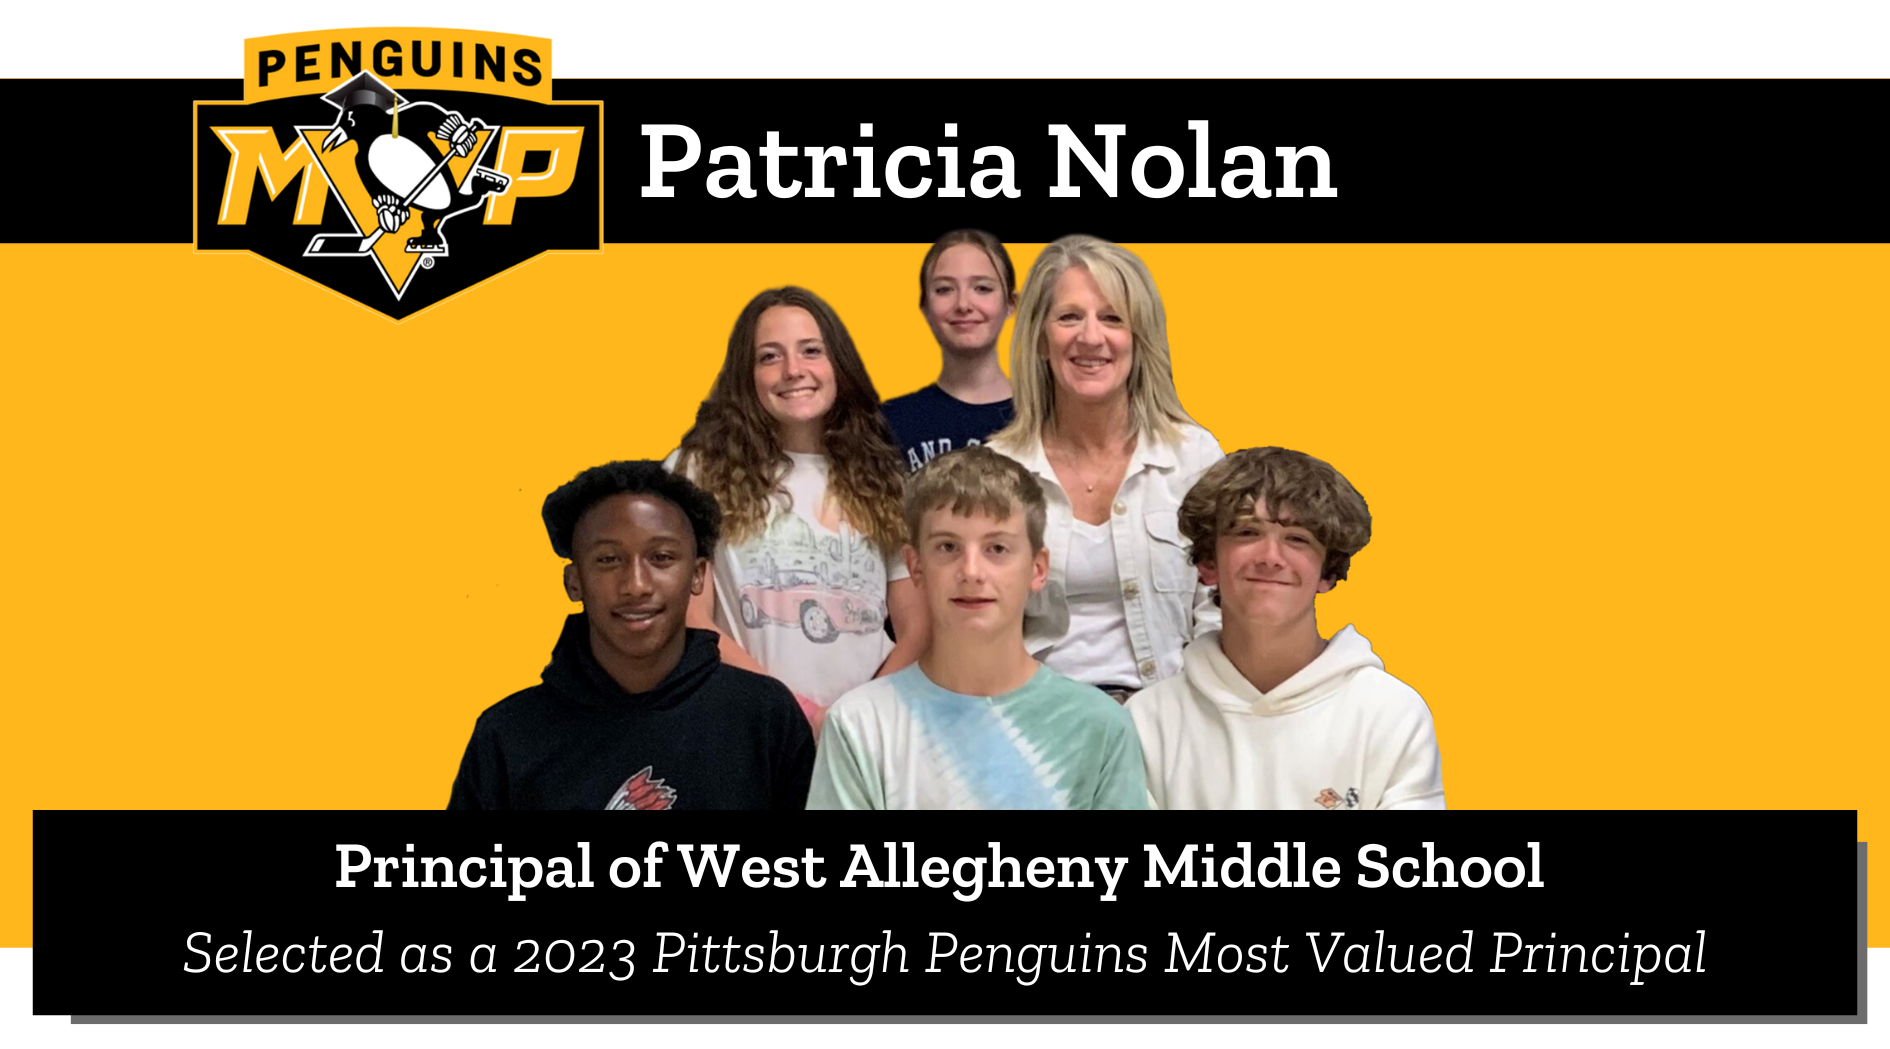 Penguins MVP Patricia Nolan, Principal of West Allegheny Middle School